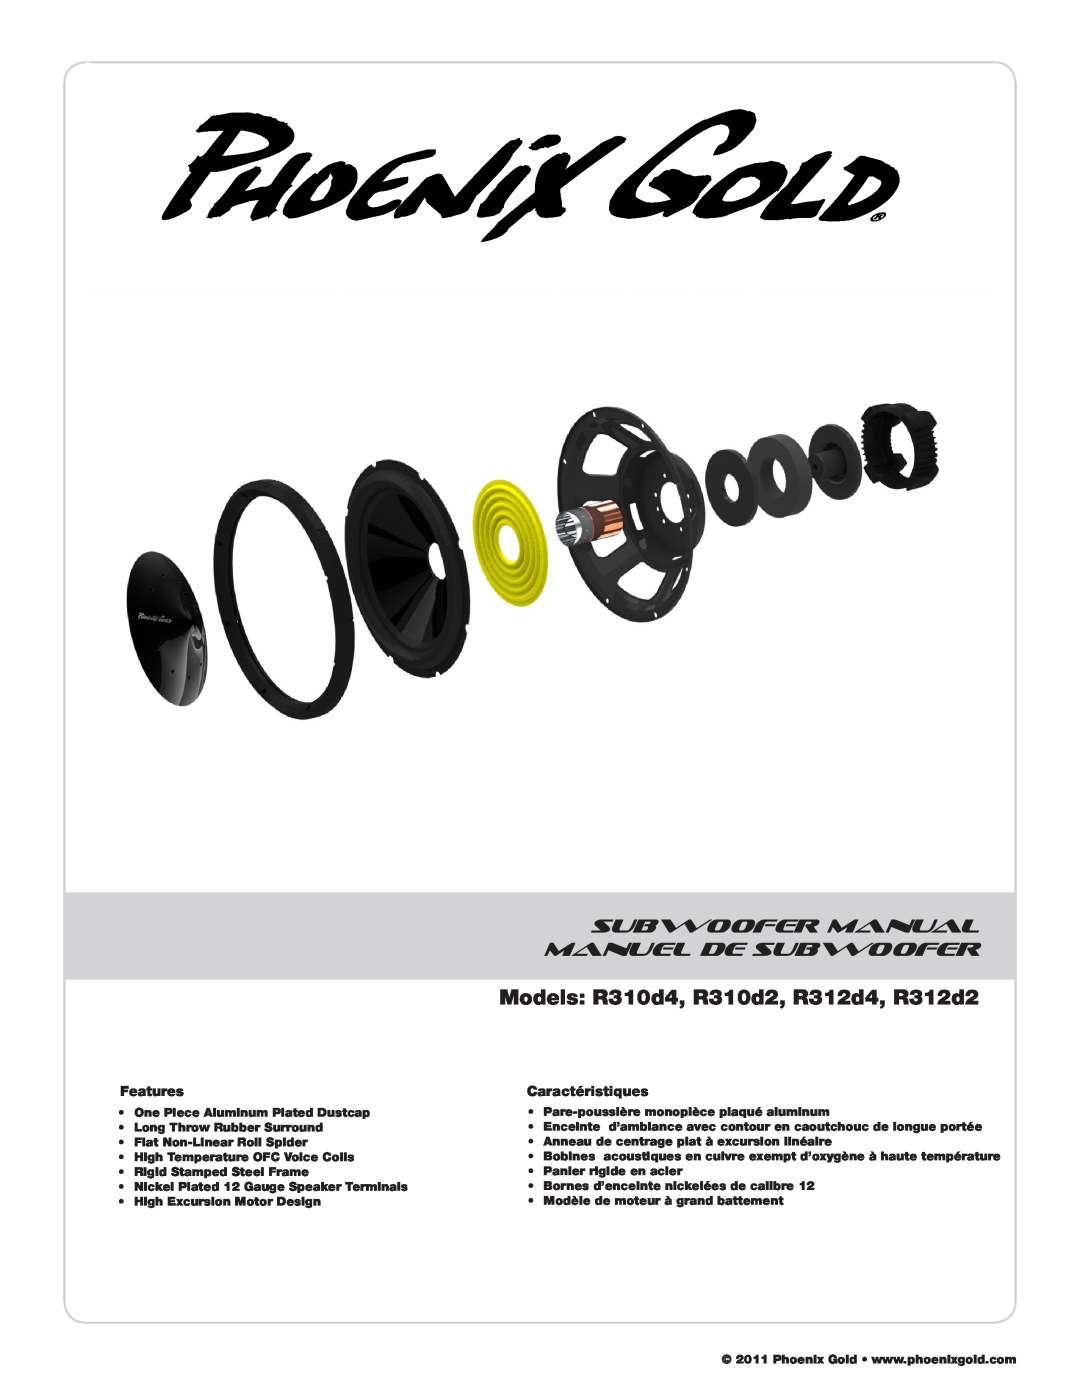 Phoenix Gold R312D4, R312D2 manual Subwoofer Manual, Models R310d4, R310d2, R312d4, R312d2, Manuel De Subwoofer, Features 